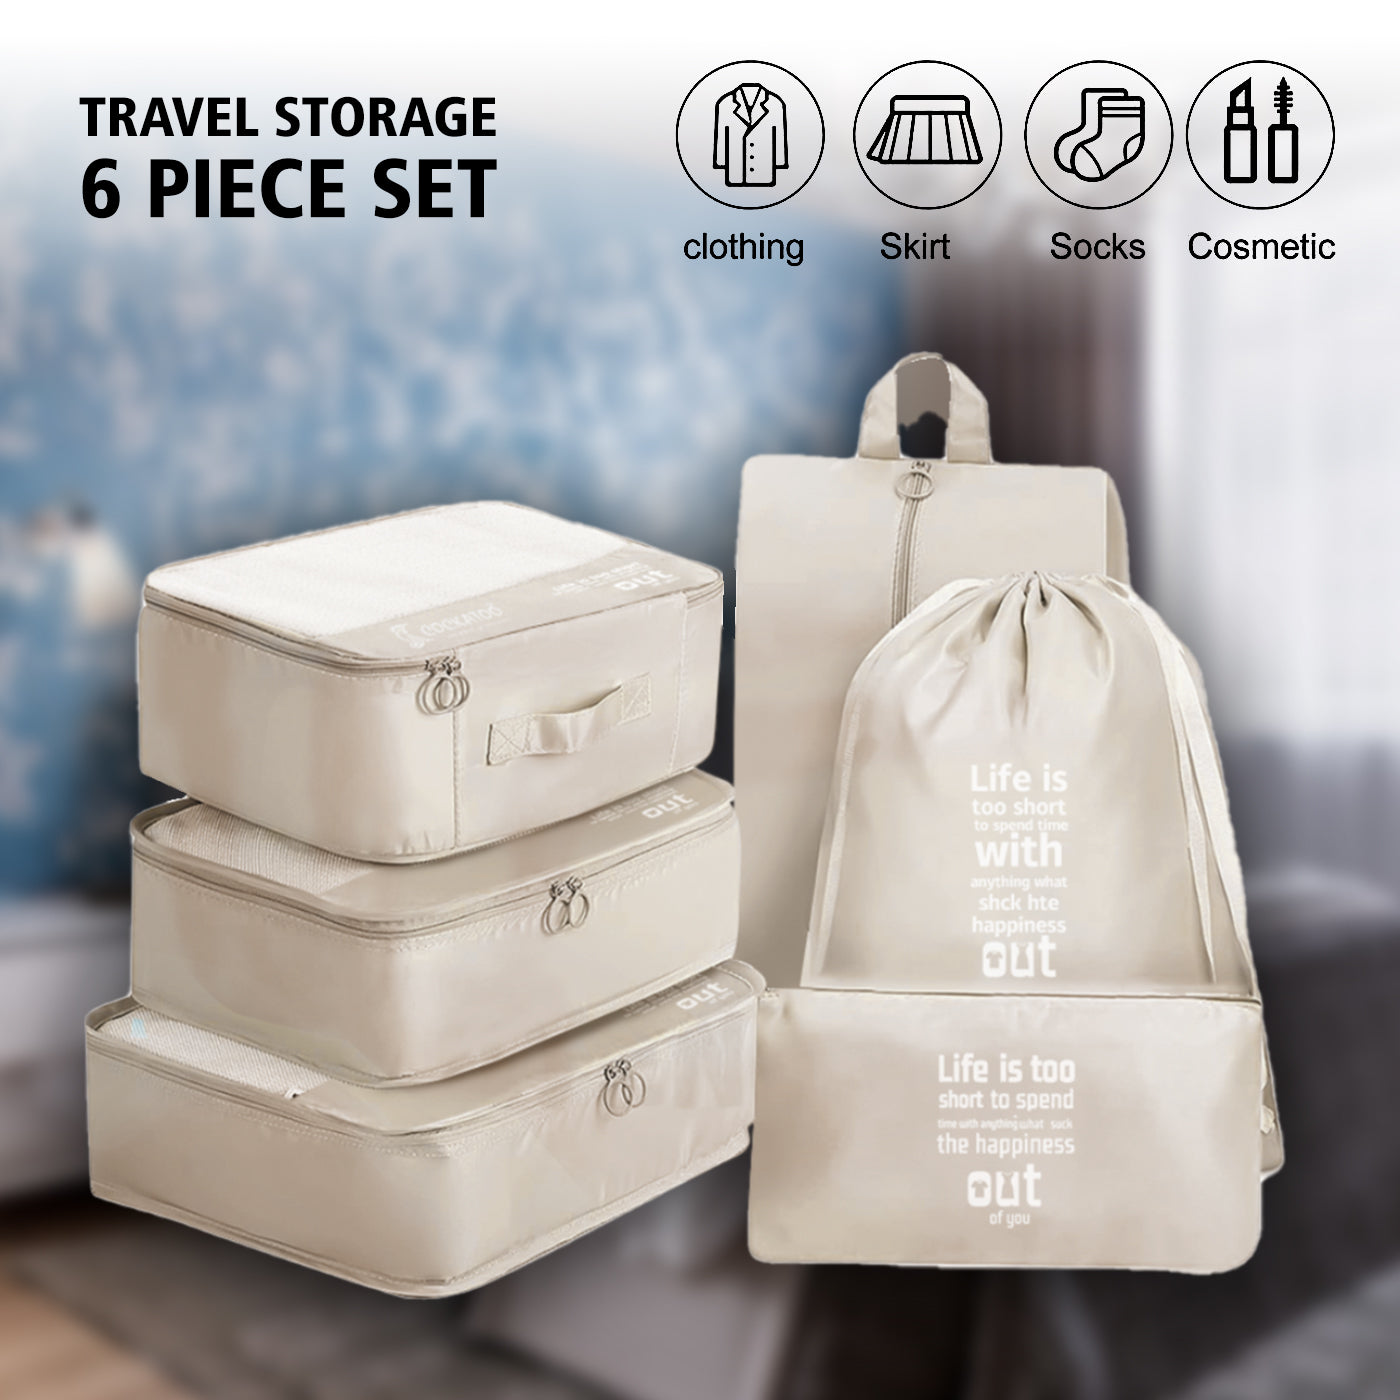 Saiyam Bra Lingerie Travel Bag - Bra Organizer Storage Case